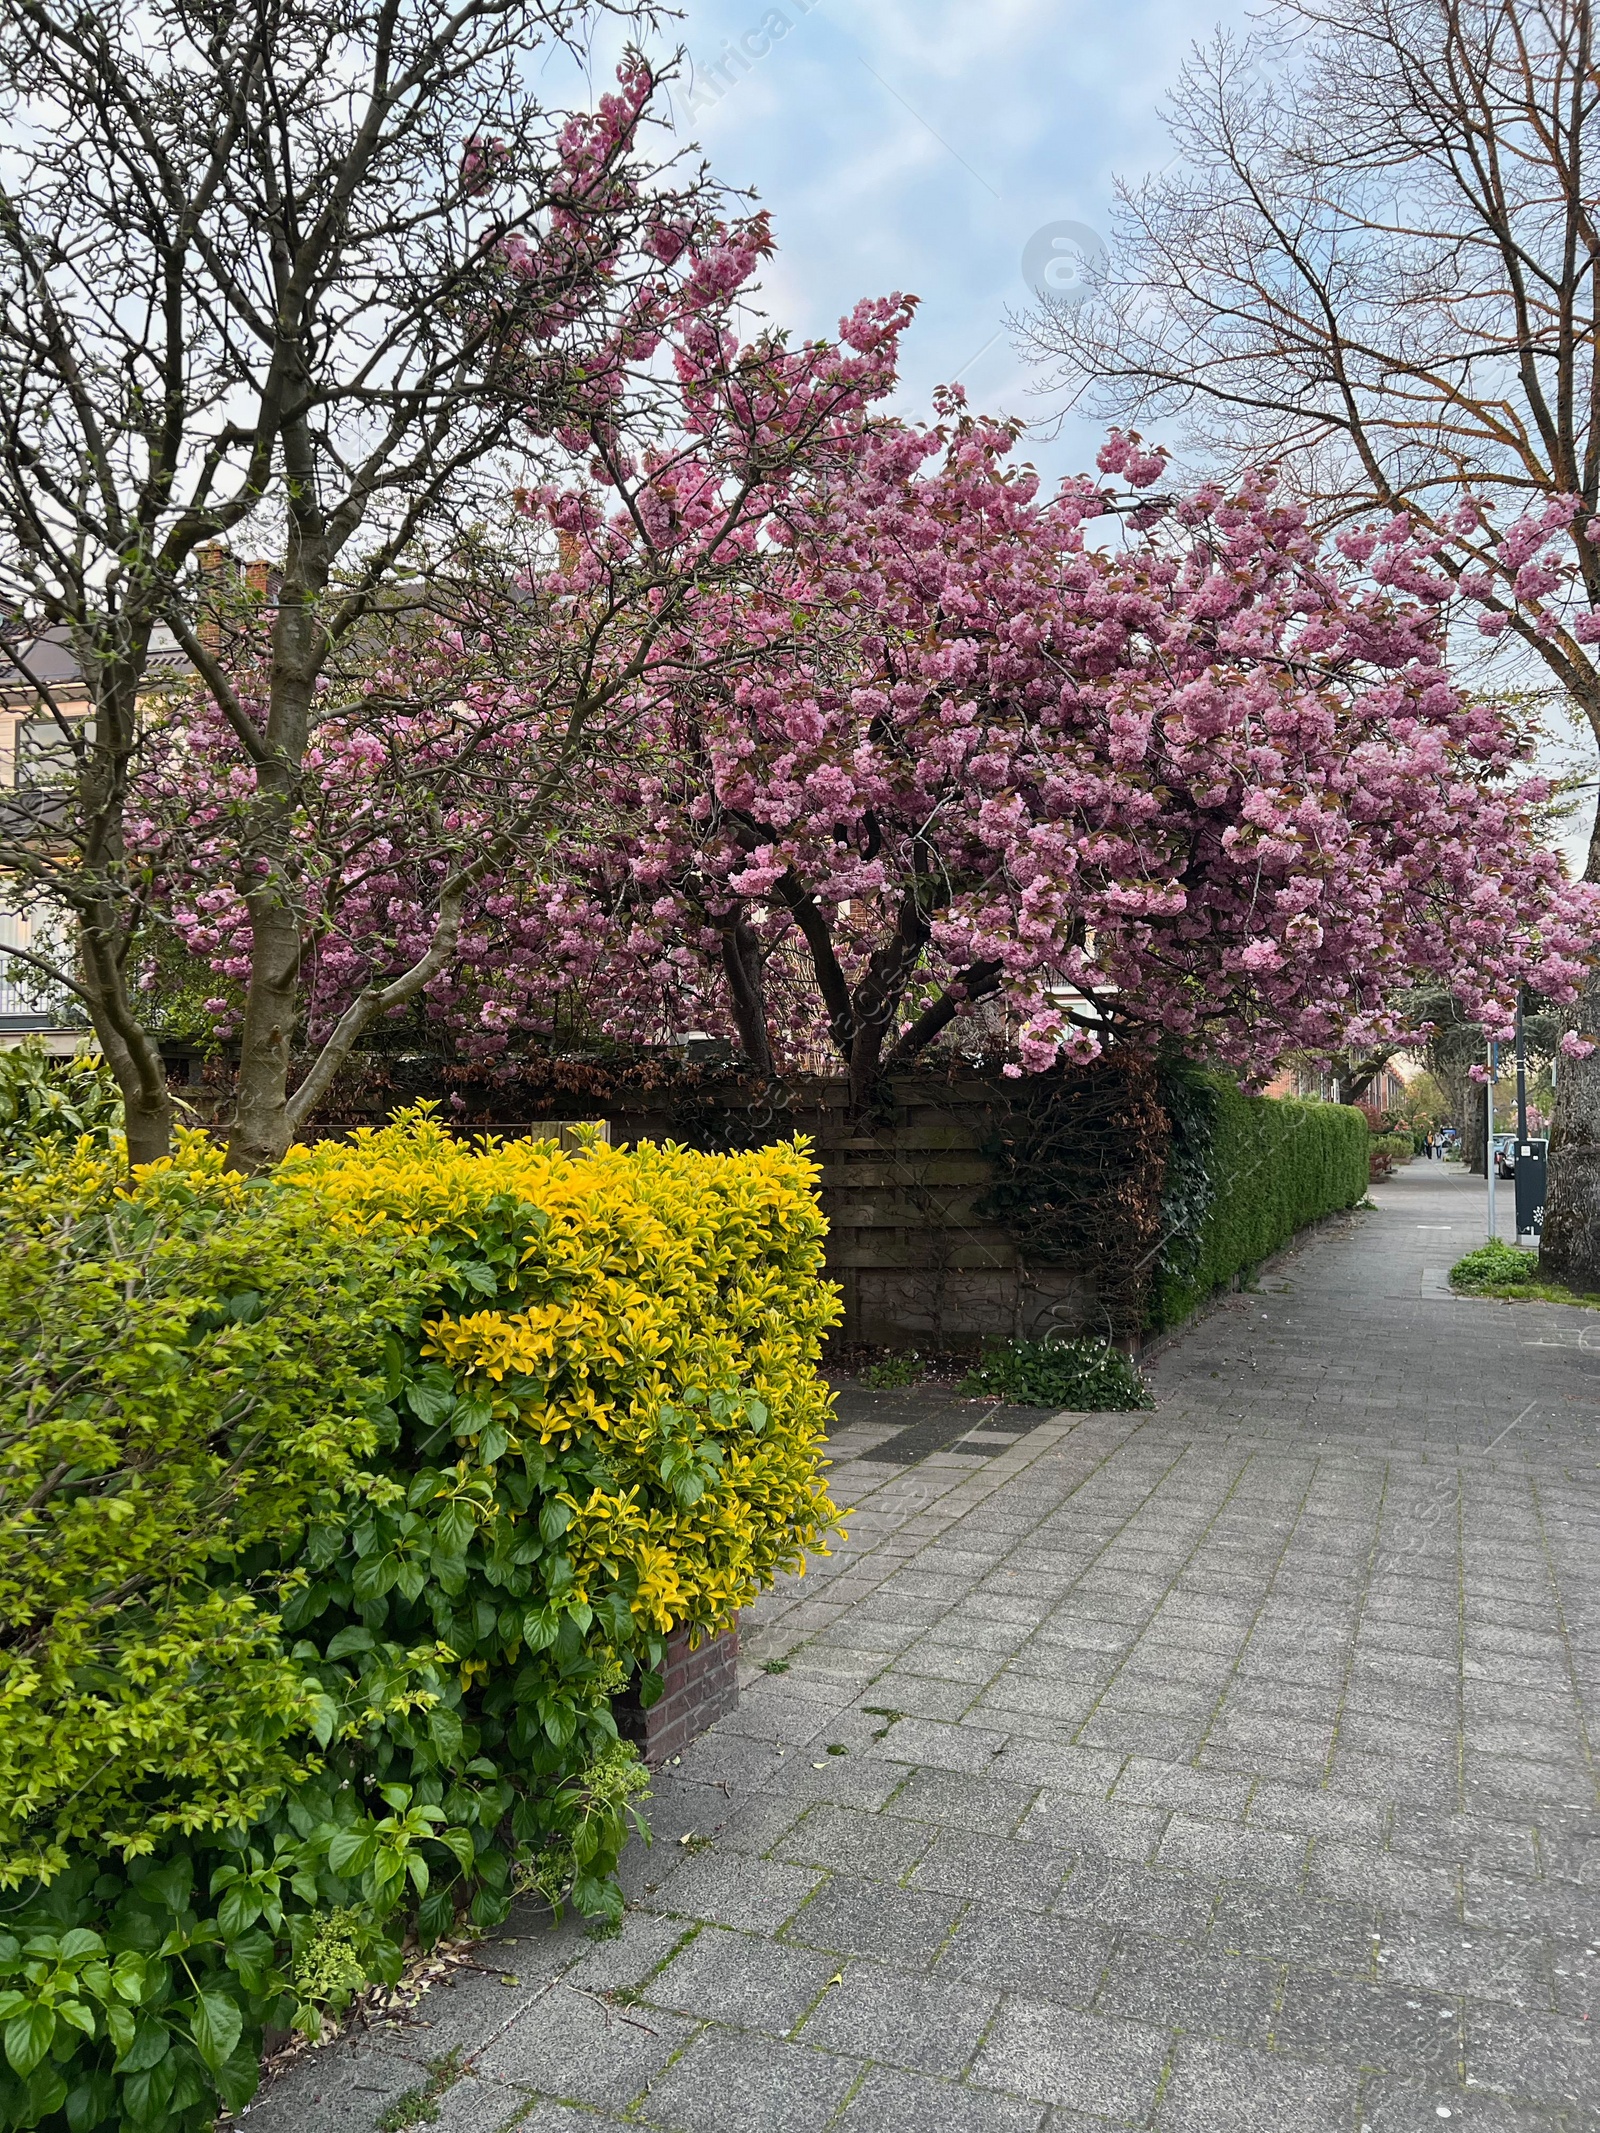 Photo of Beautiful sakura tree with pink flowers growing on city street